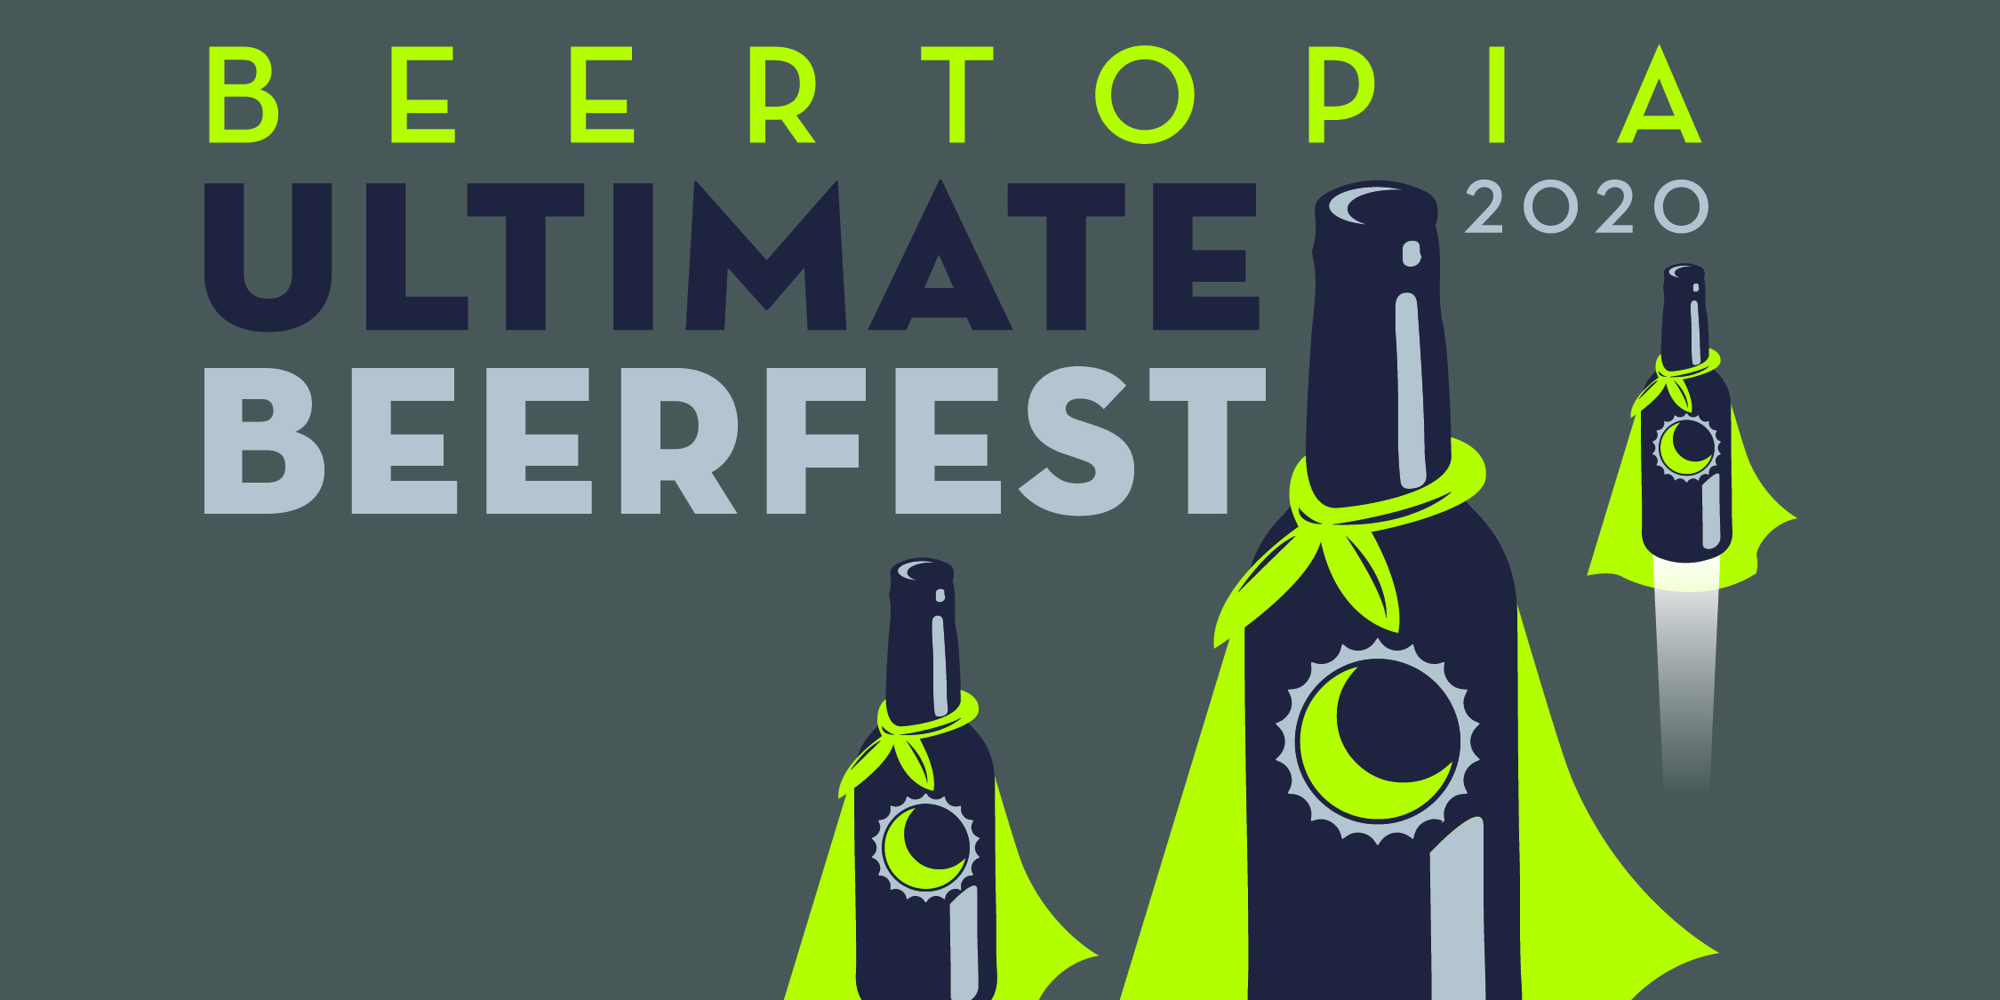 Beertopia's Ultimate Beerfest promotional image